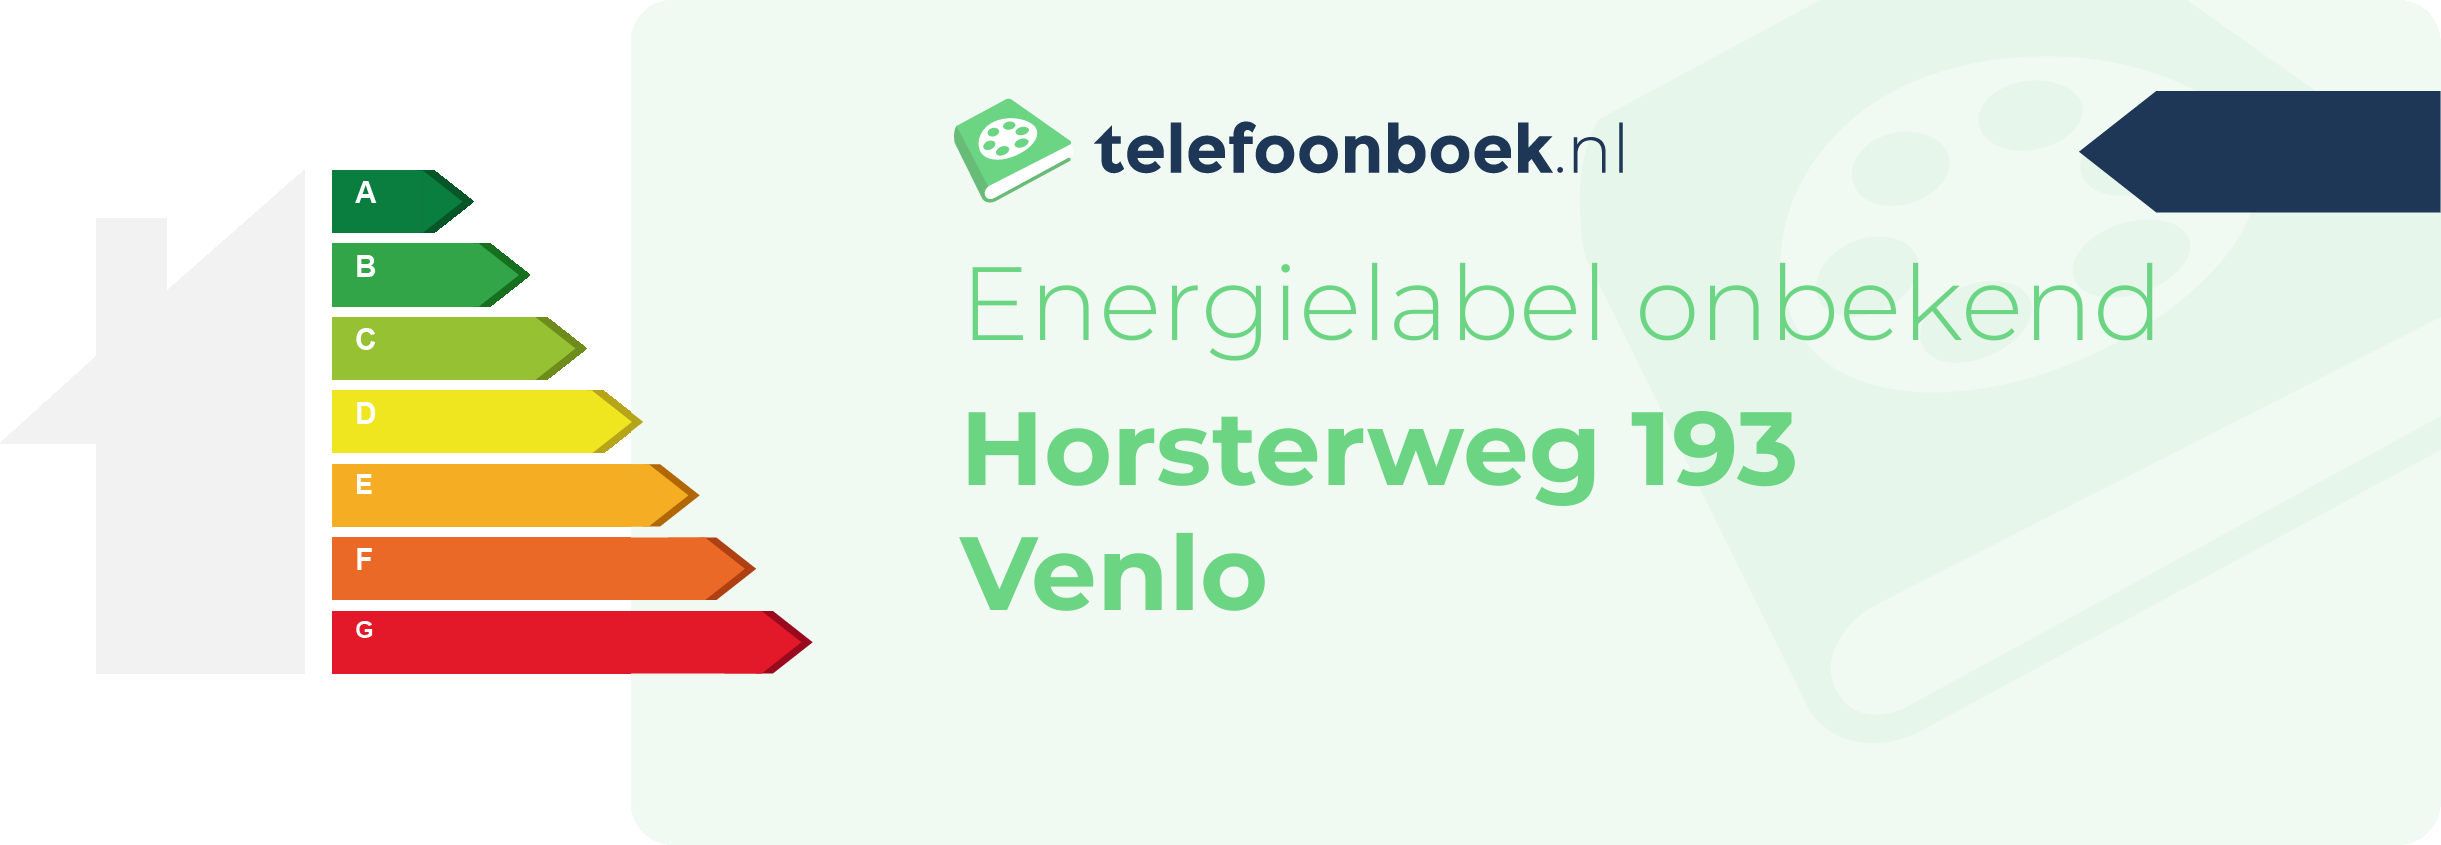 Energielabel Horsterweg 193 Venlo